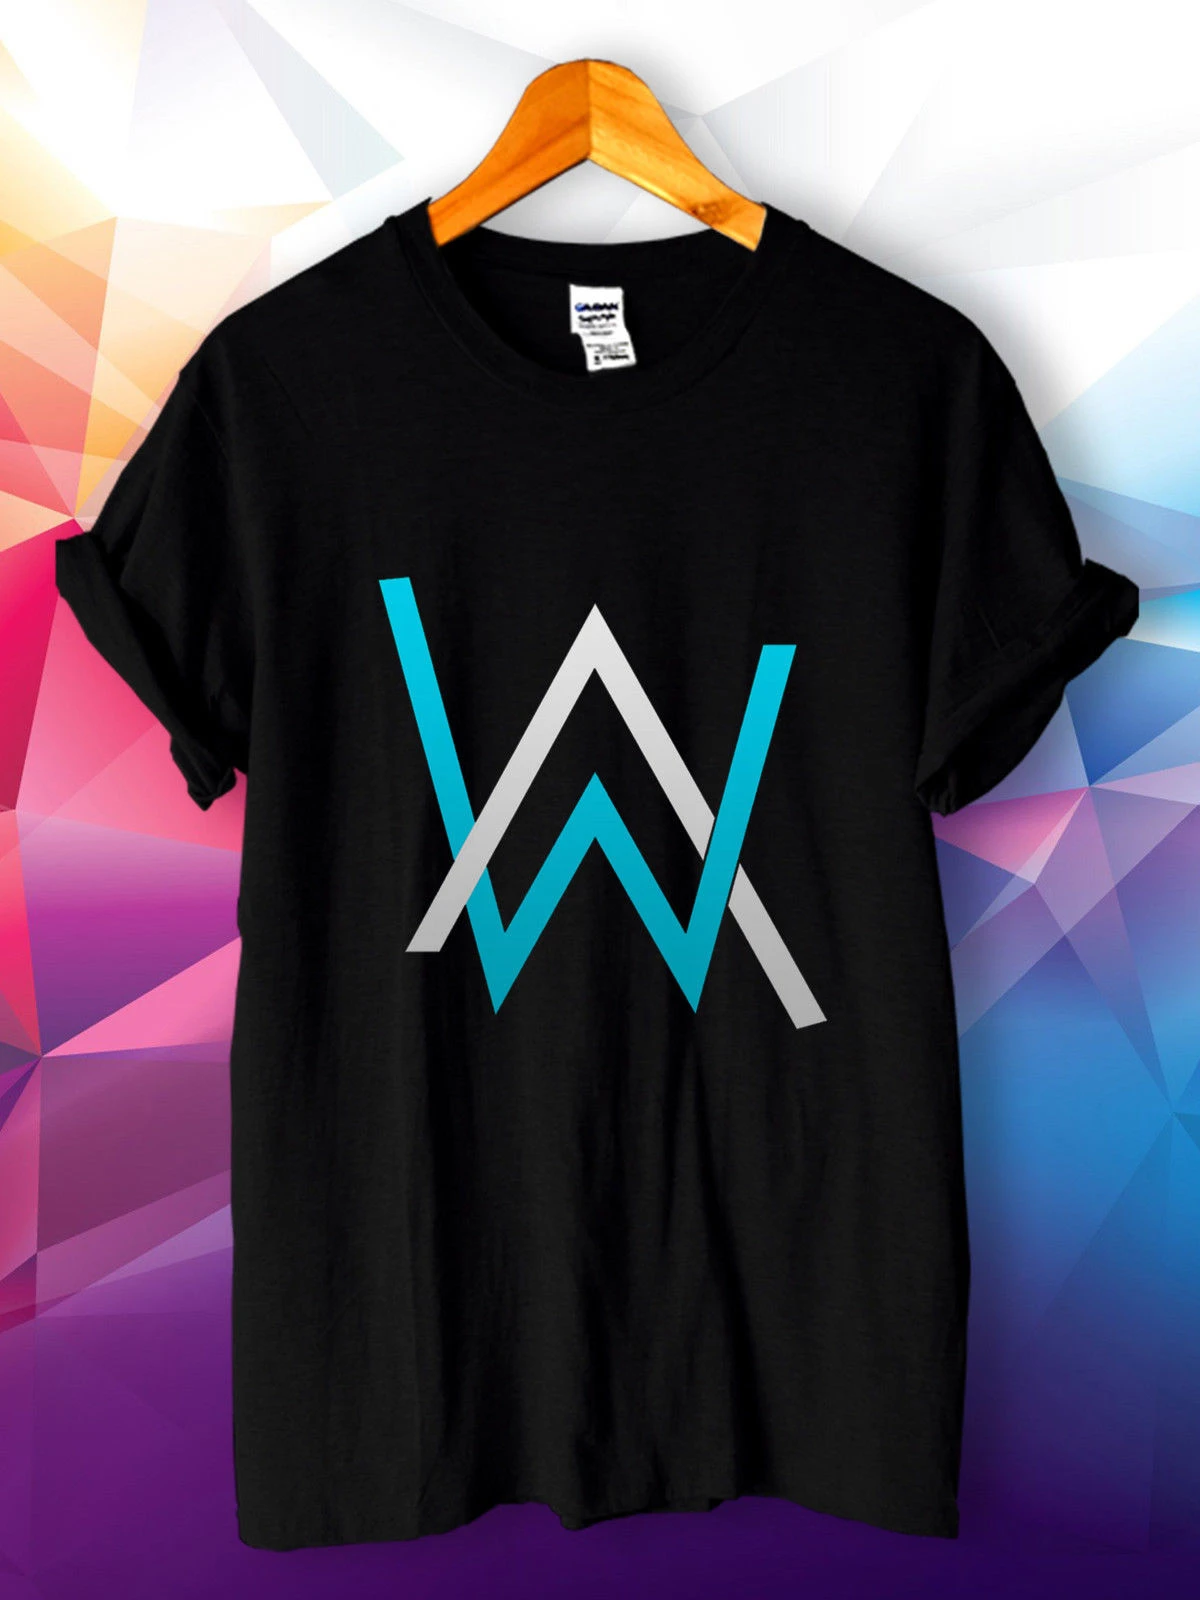 AW Alan Walker Logo DJ Walkzz música calle desgaste Casual camiseta S, M, L, XL, 2XL|Camisetas| - AliExpress